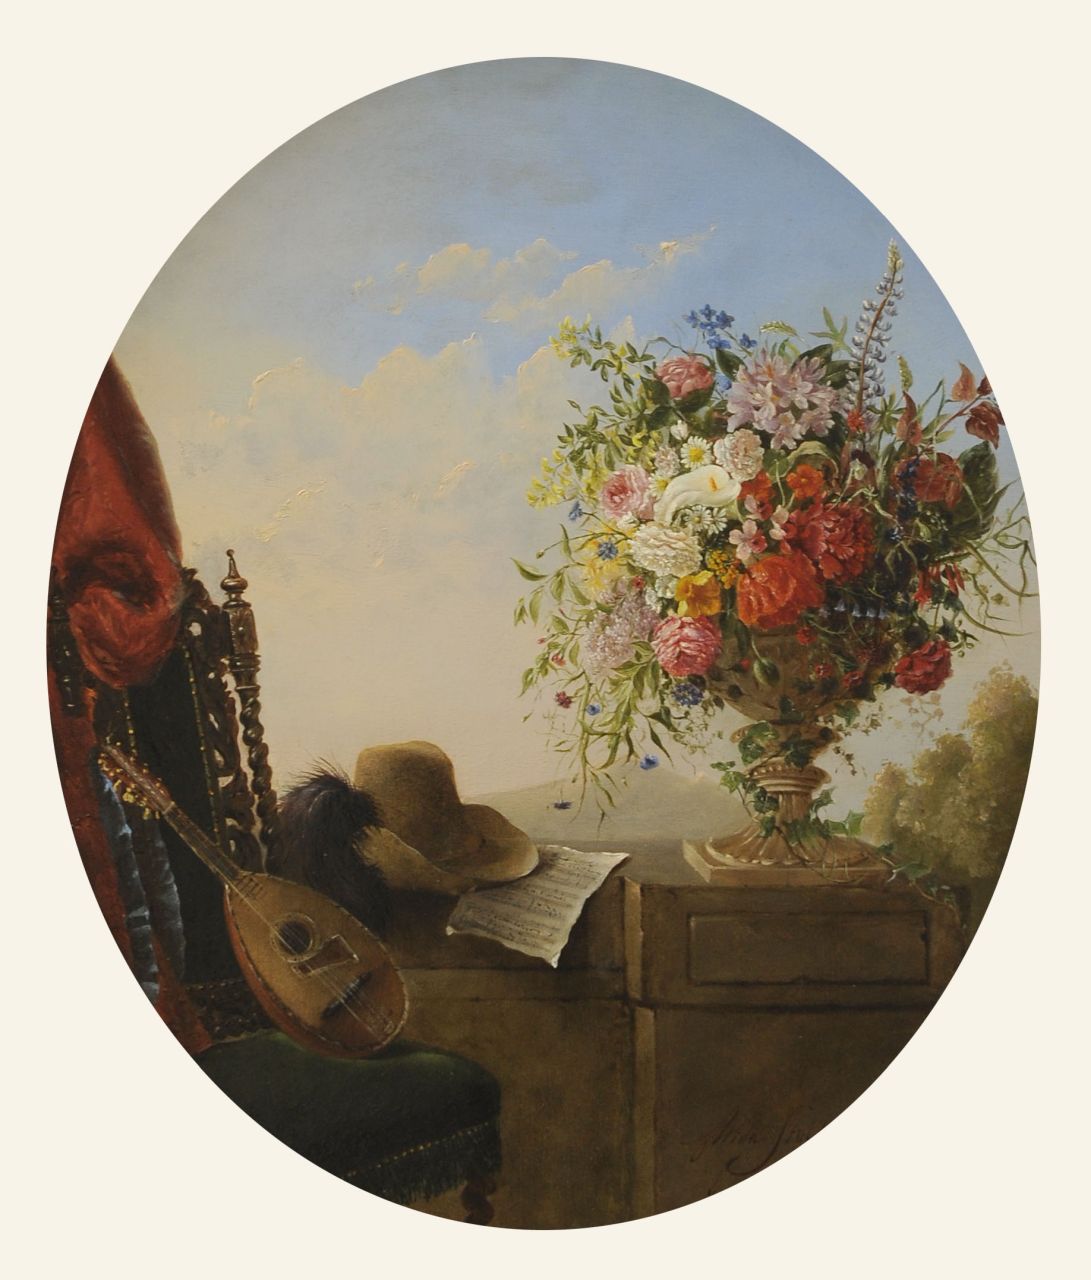 Alida van Stolk | Stilleven met pronkboeket, hoed en mandoline, olieverf op paneel, 51,0 x 42,0 cm, gesigneerd r.o. en gedateerd 1853